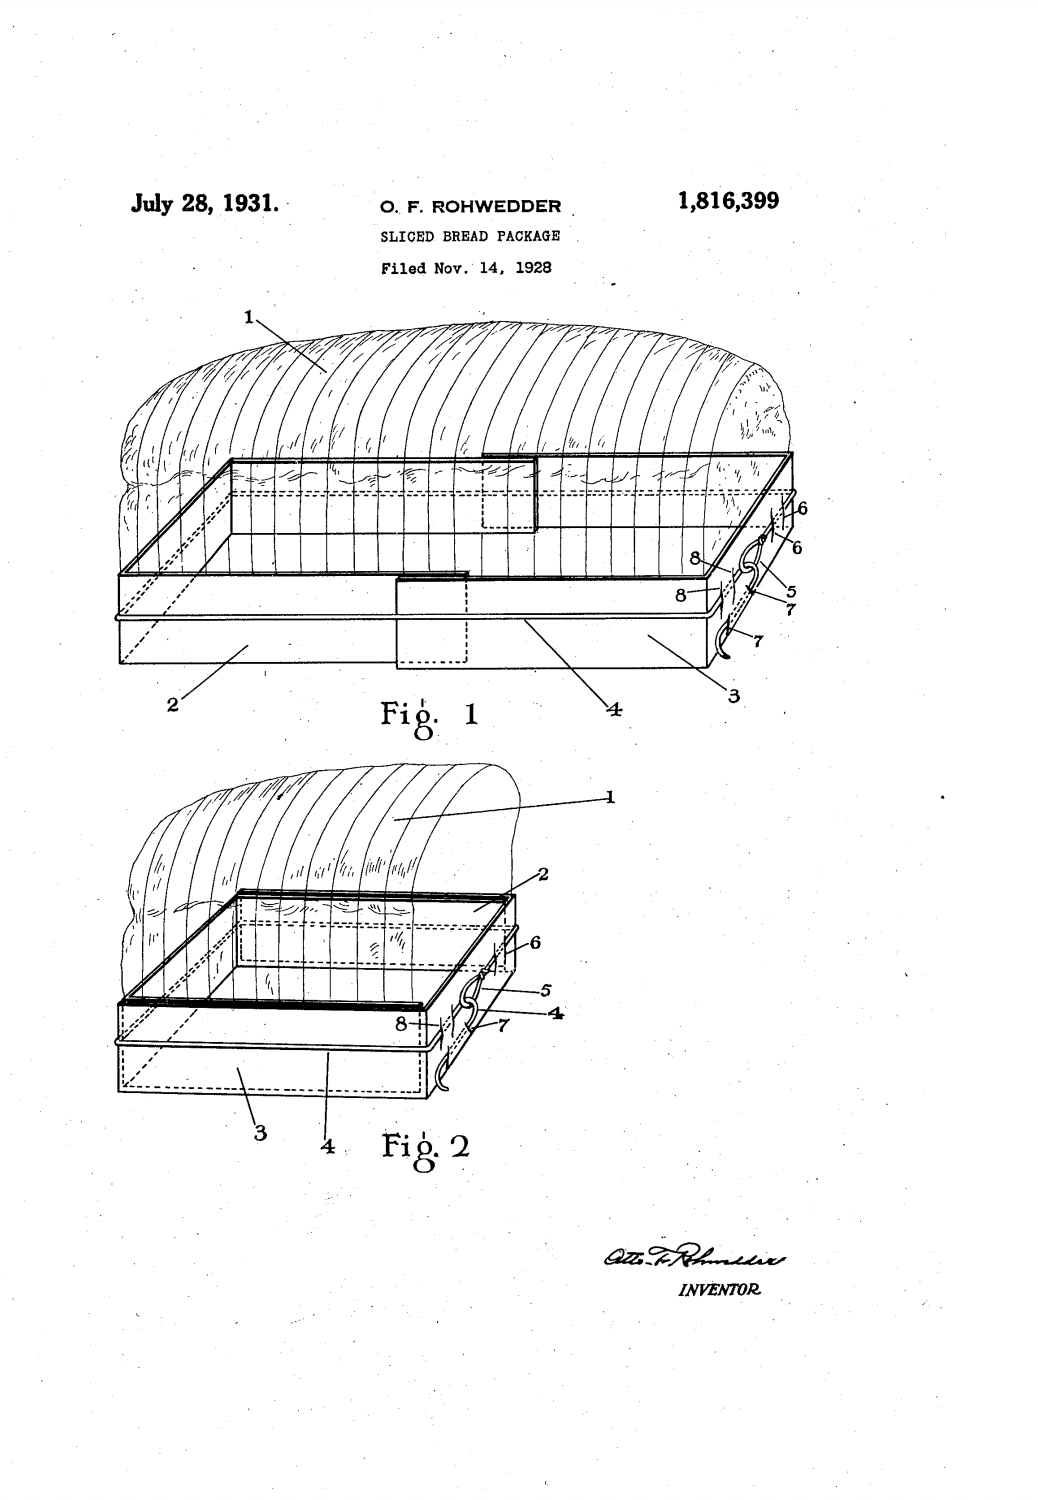 Bread slicing patent